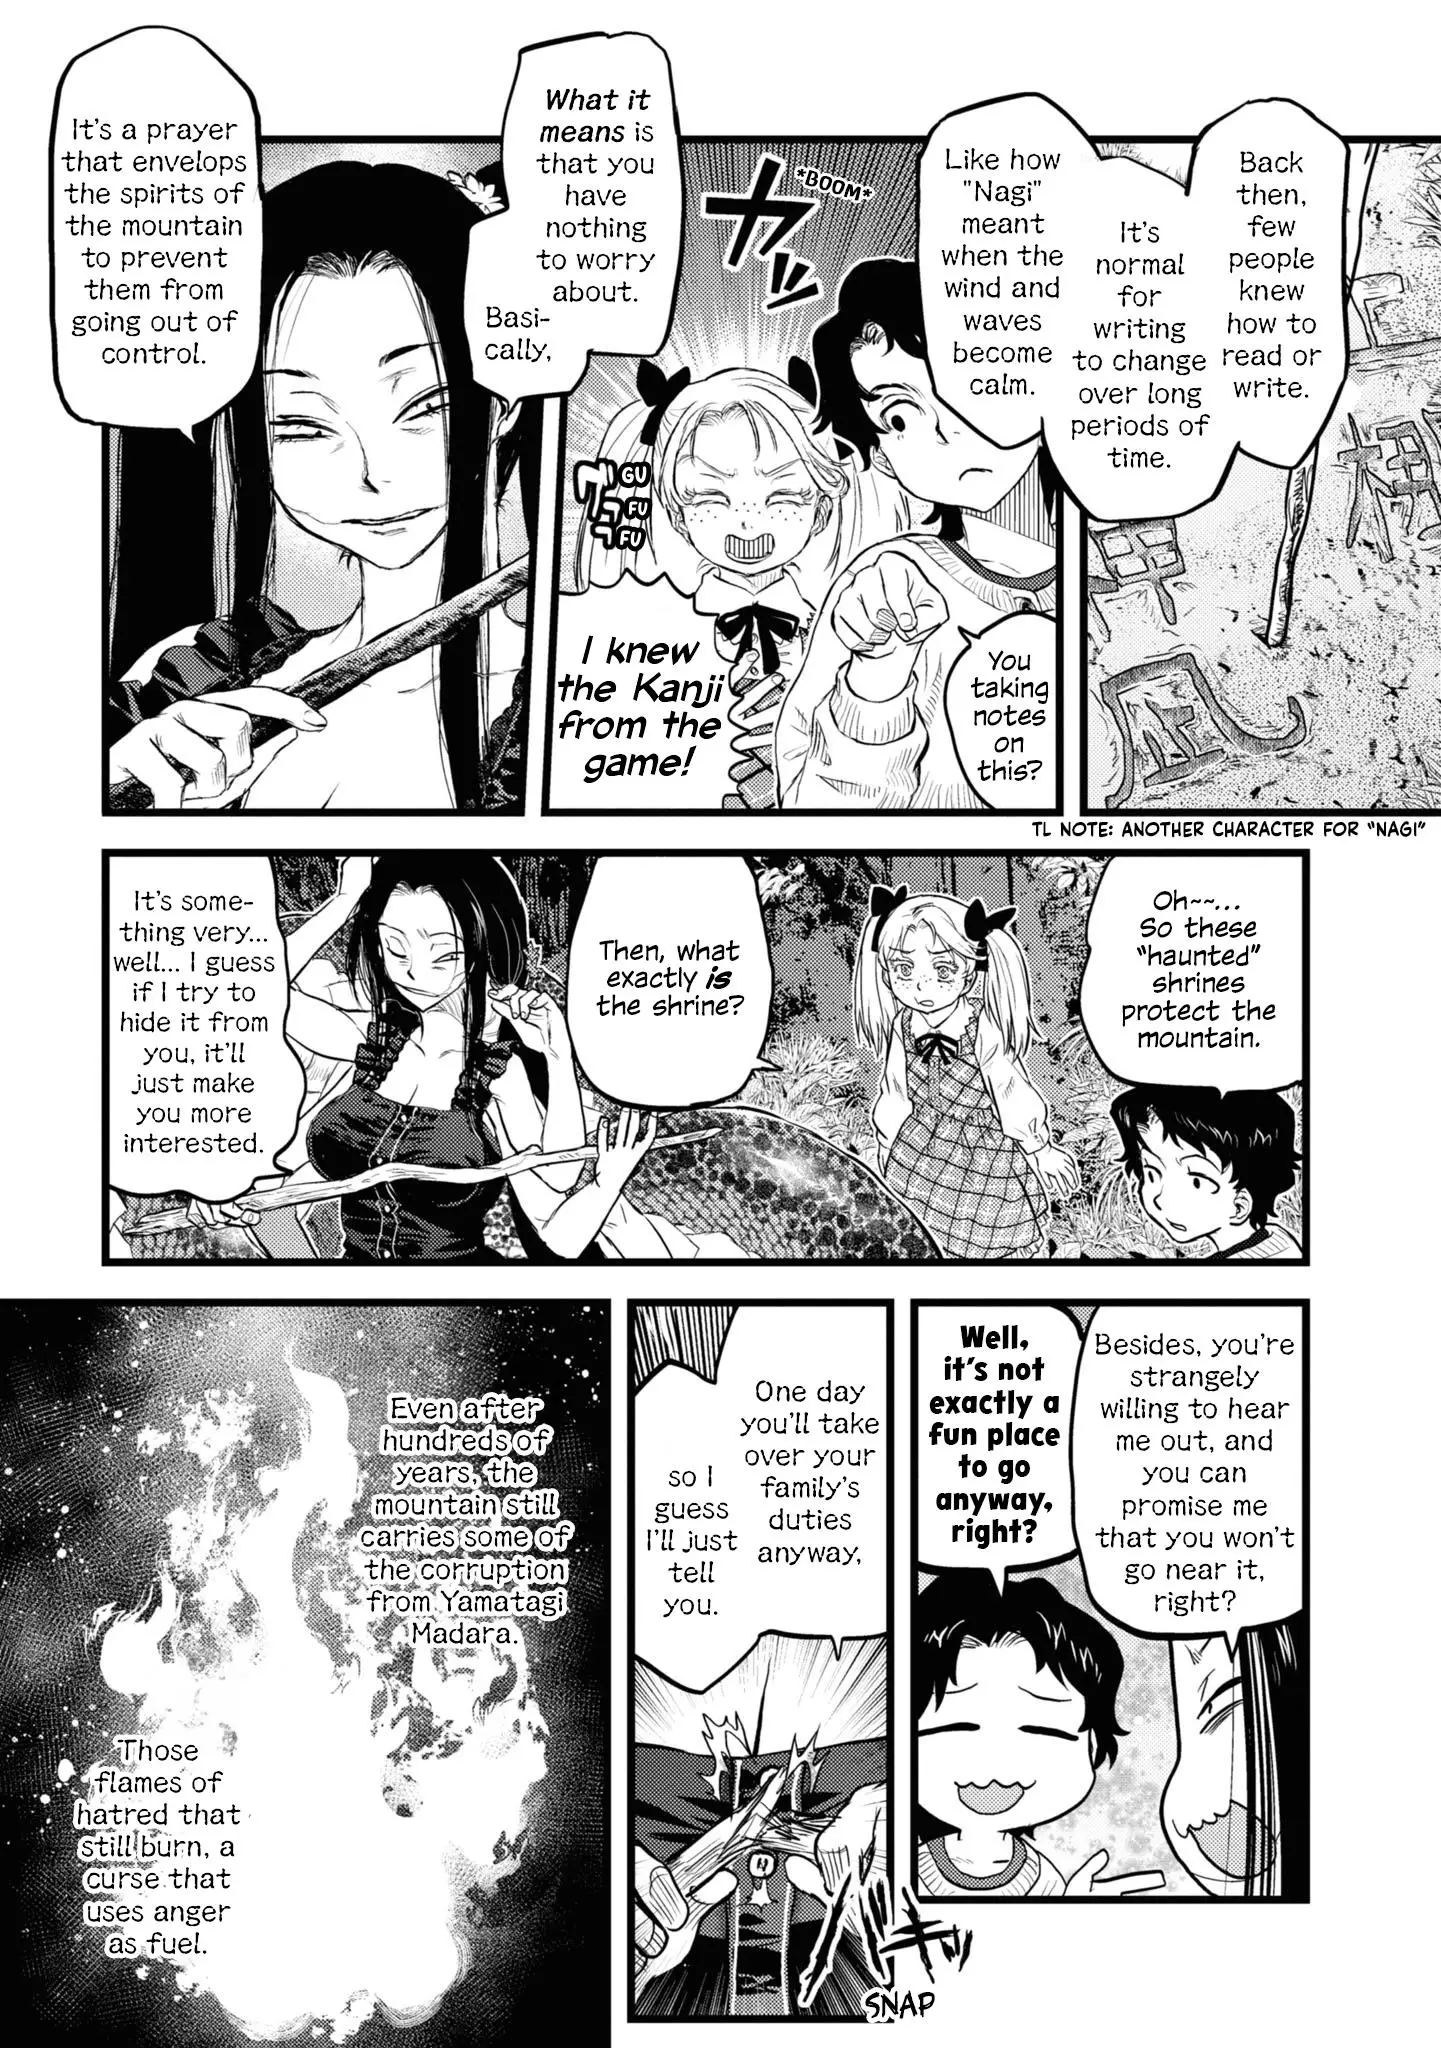 Reiwa No Dara-San - 8 page 17-5243d66c